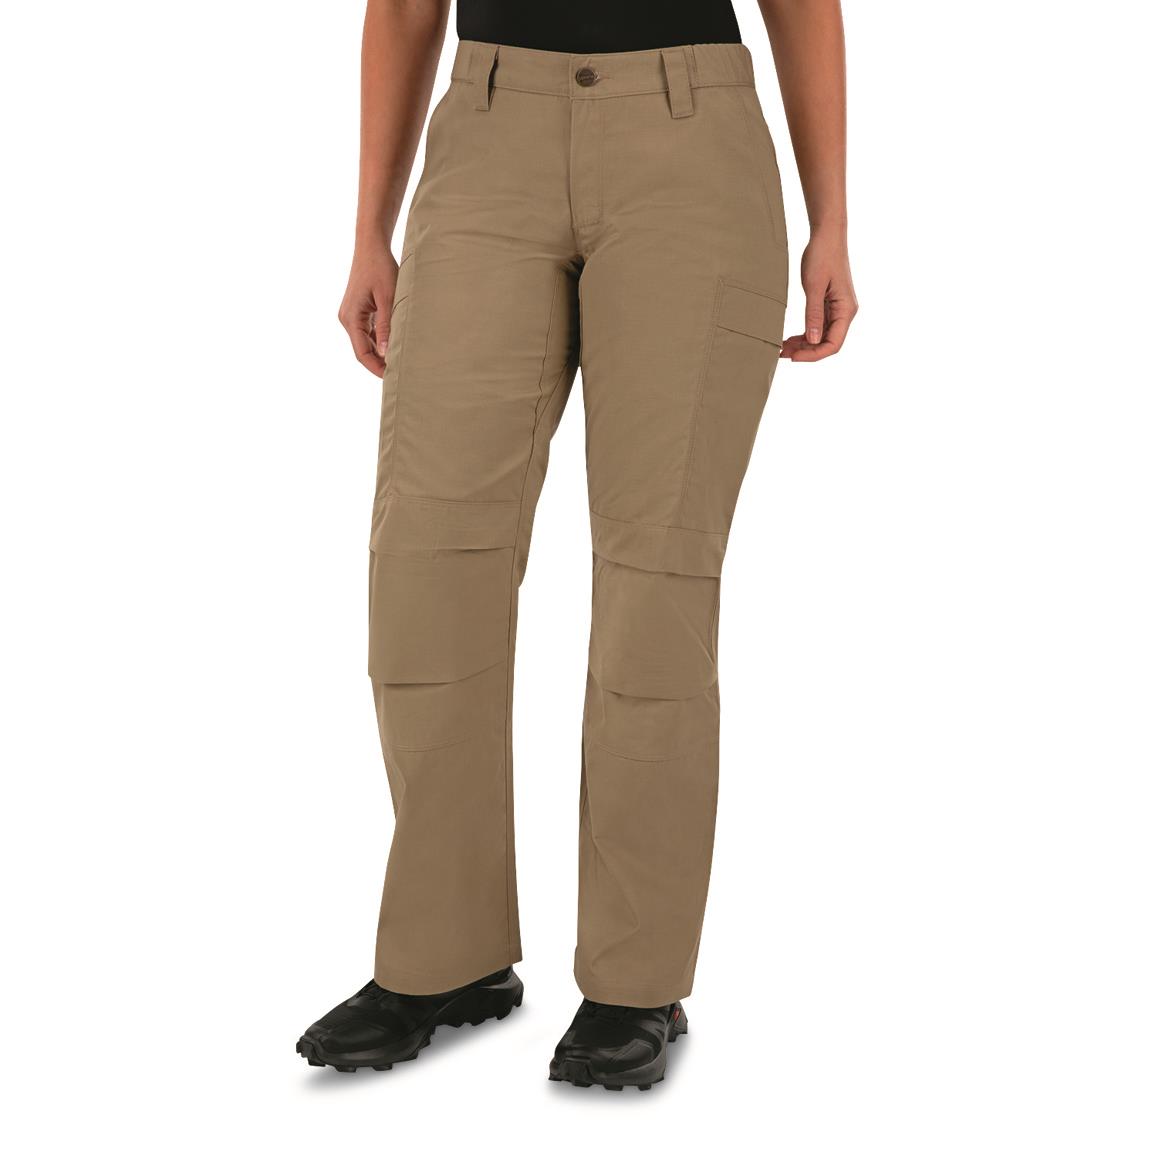 Vertx Women's Phantom LT 2.0 Tactical Pants, Desert Tan